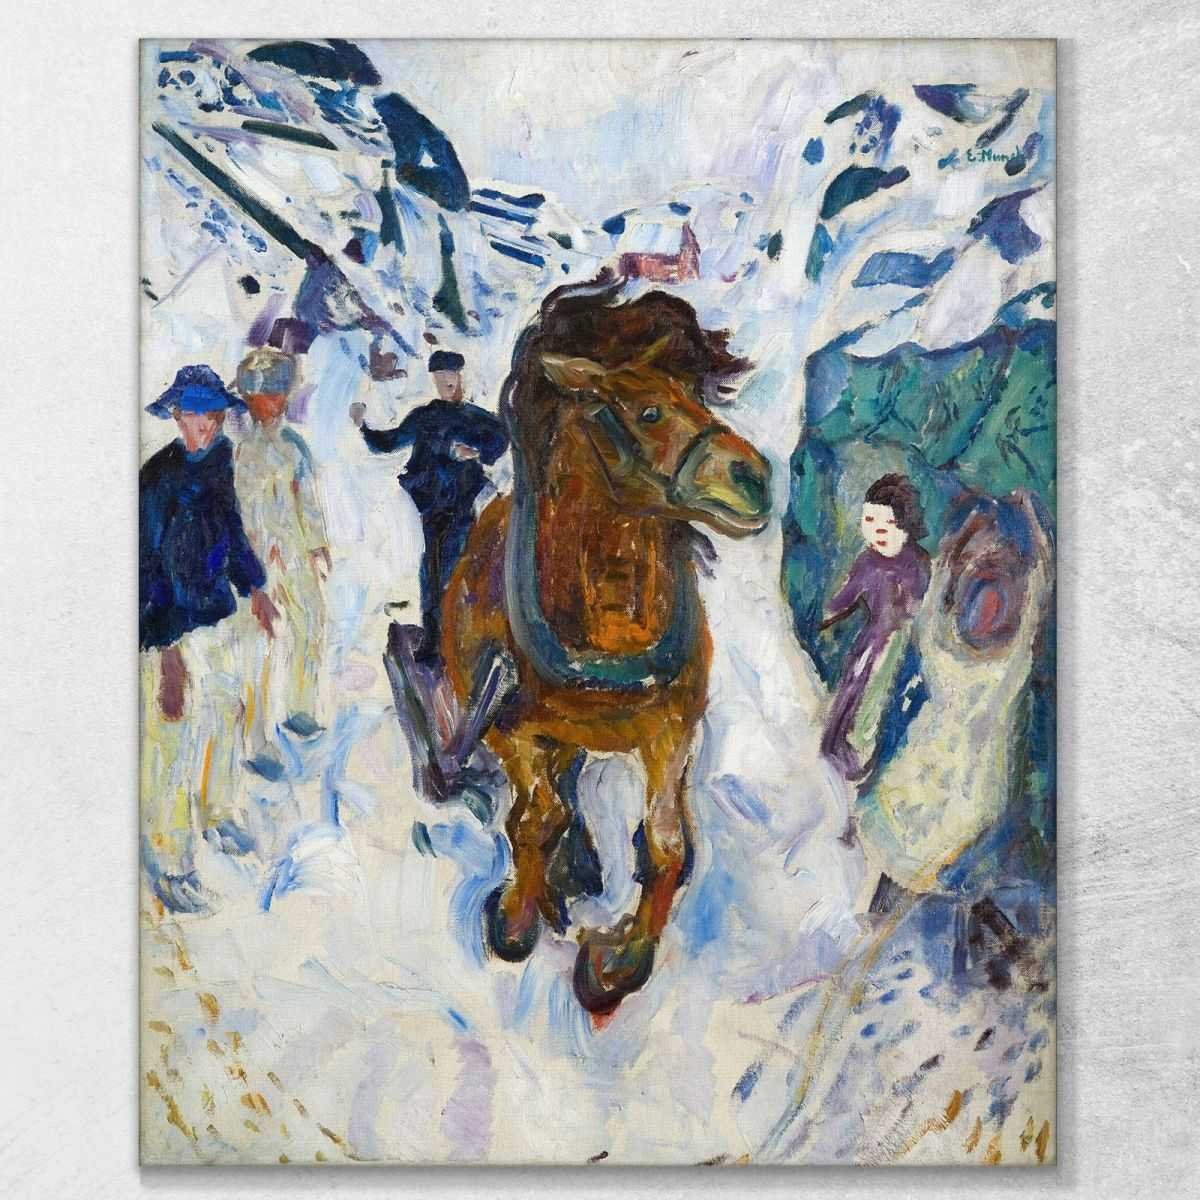 Cavallo al galoppo Edvard Munch quadro stampa su tela 100x80 cm EM003